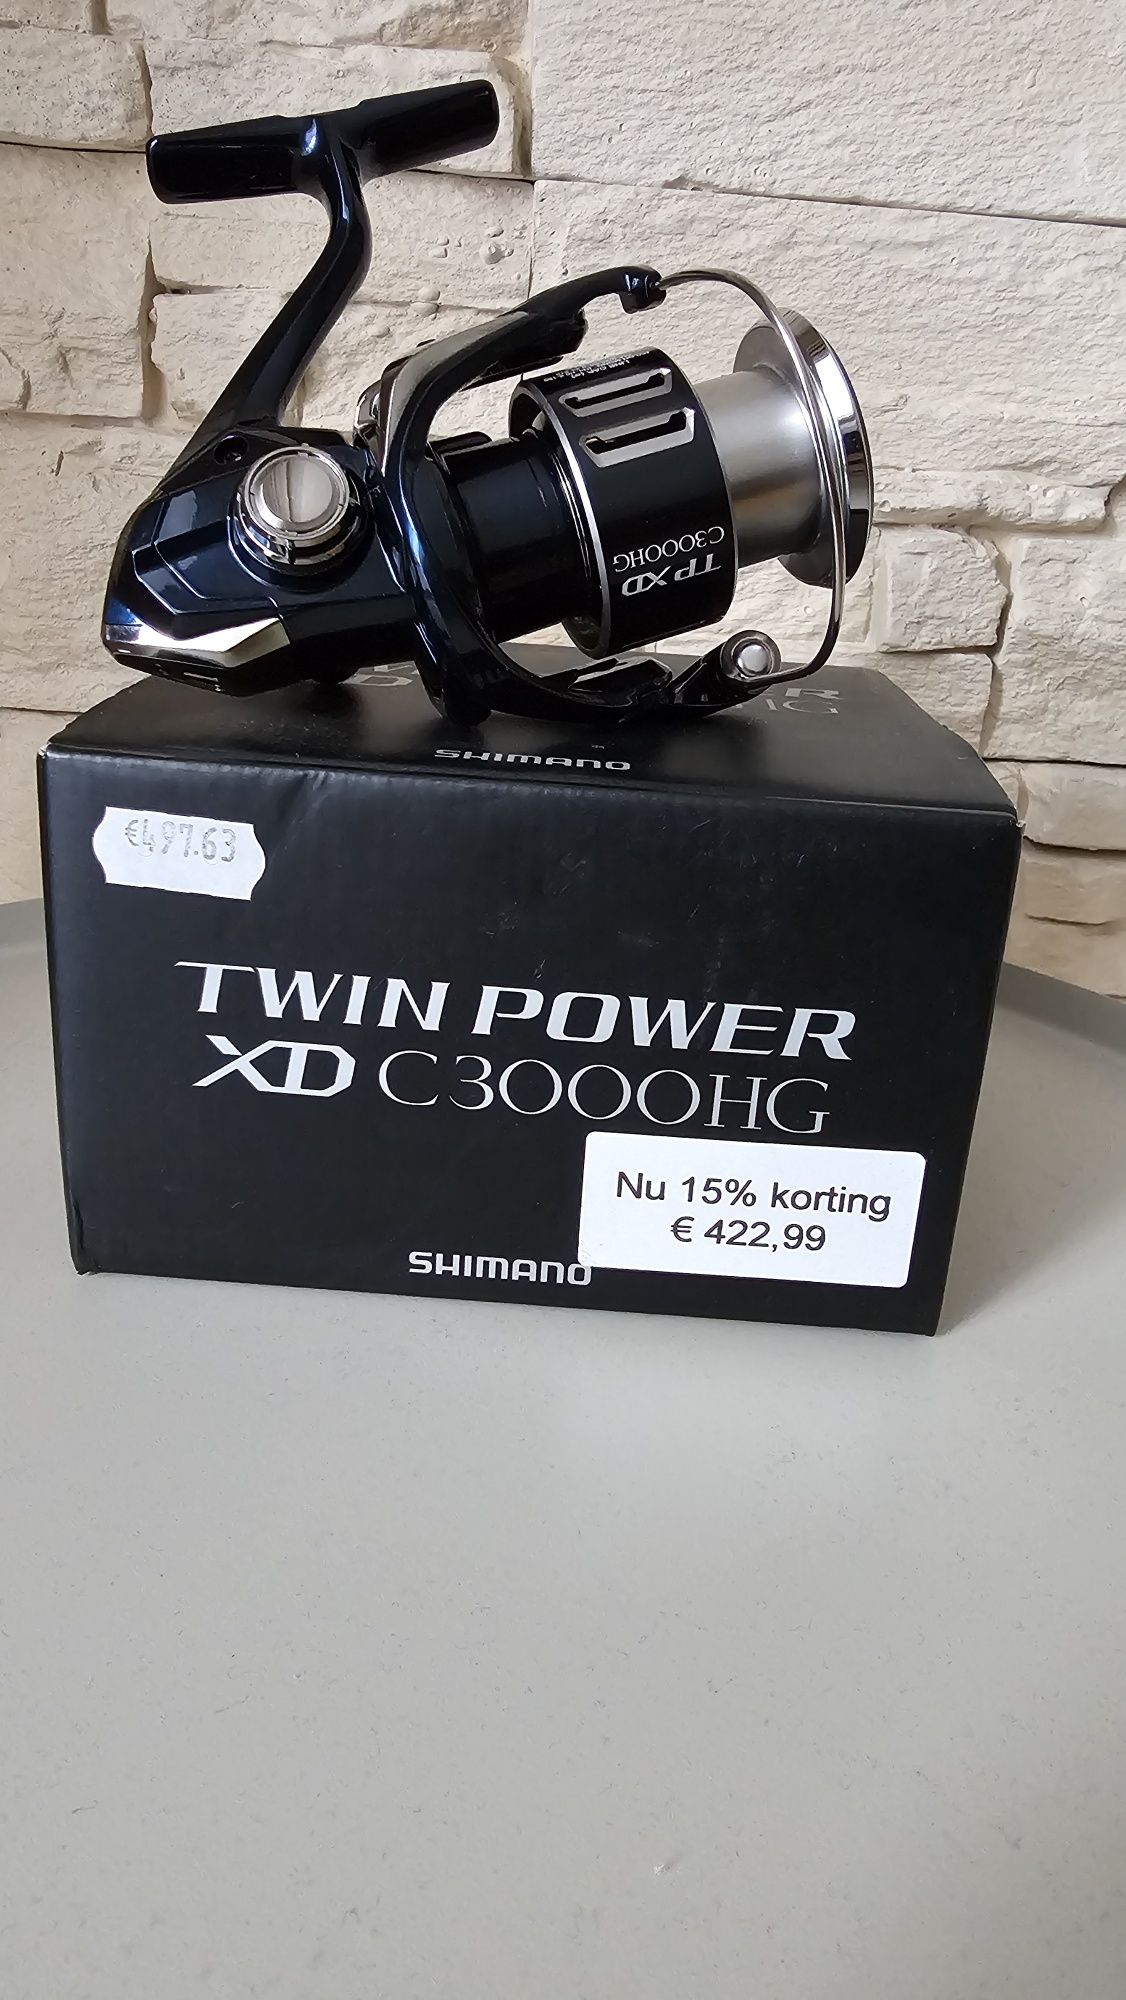 Shimano twin power xd c3000hg